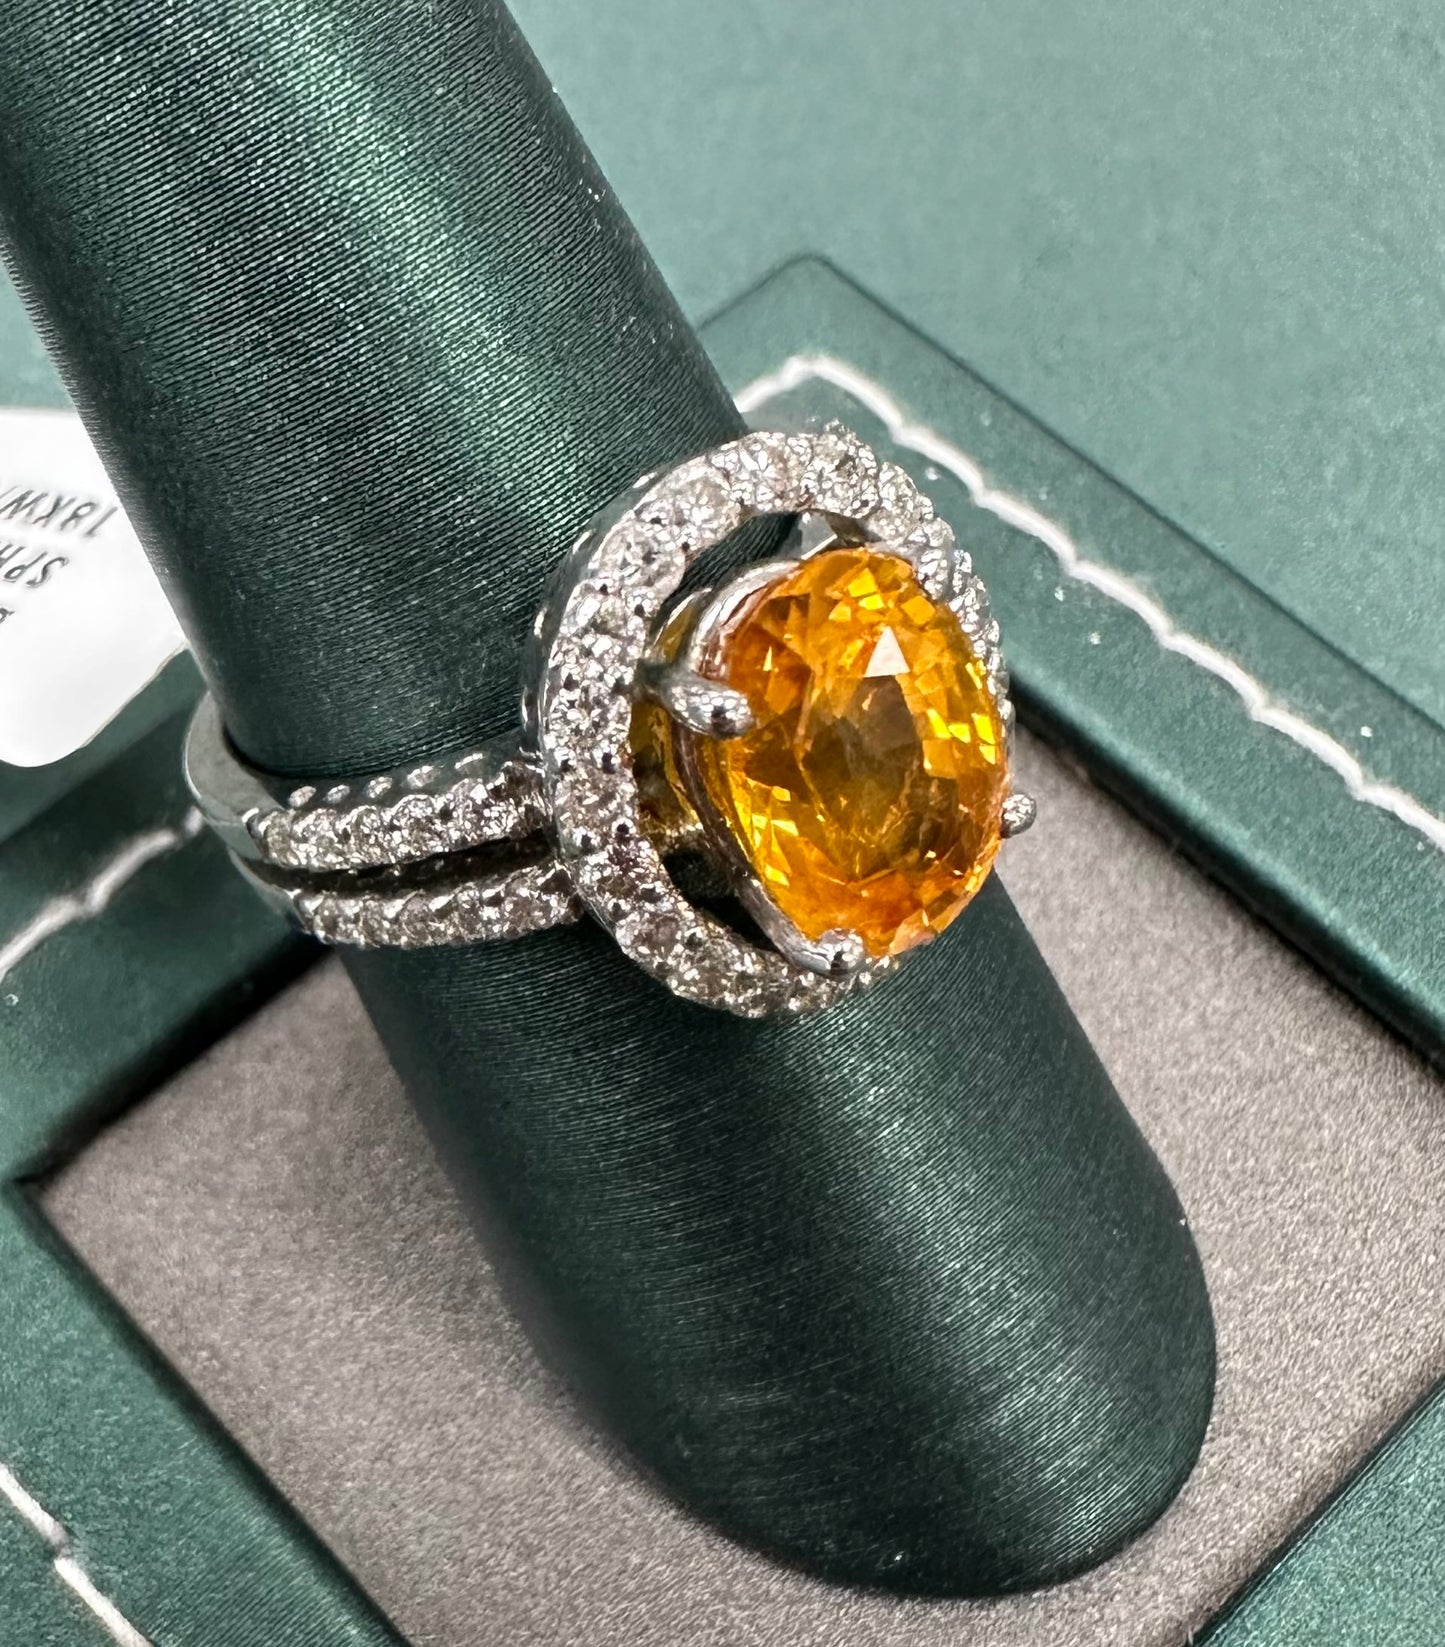 The orange sapphire sun diamond ring